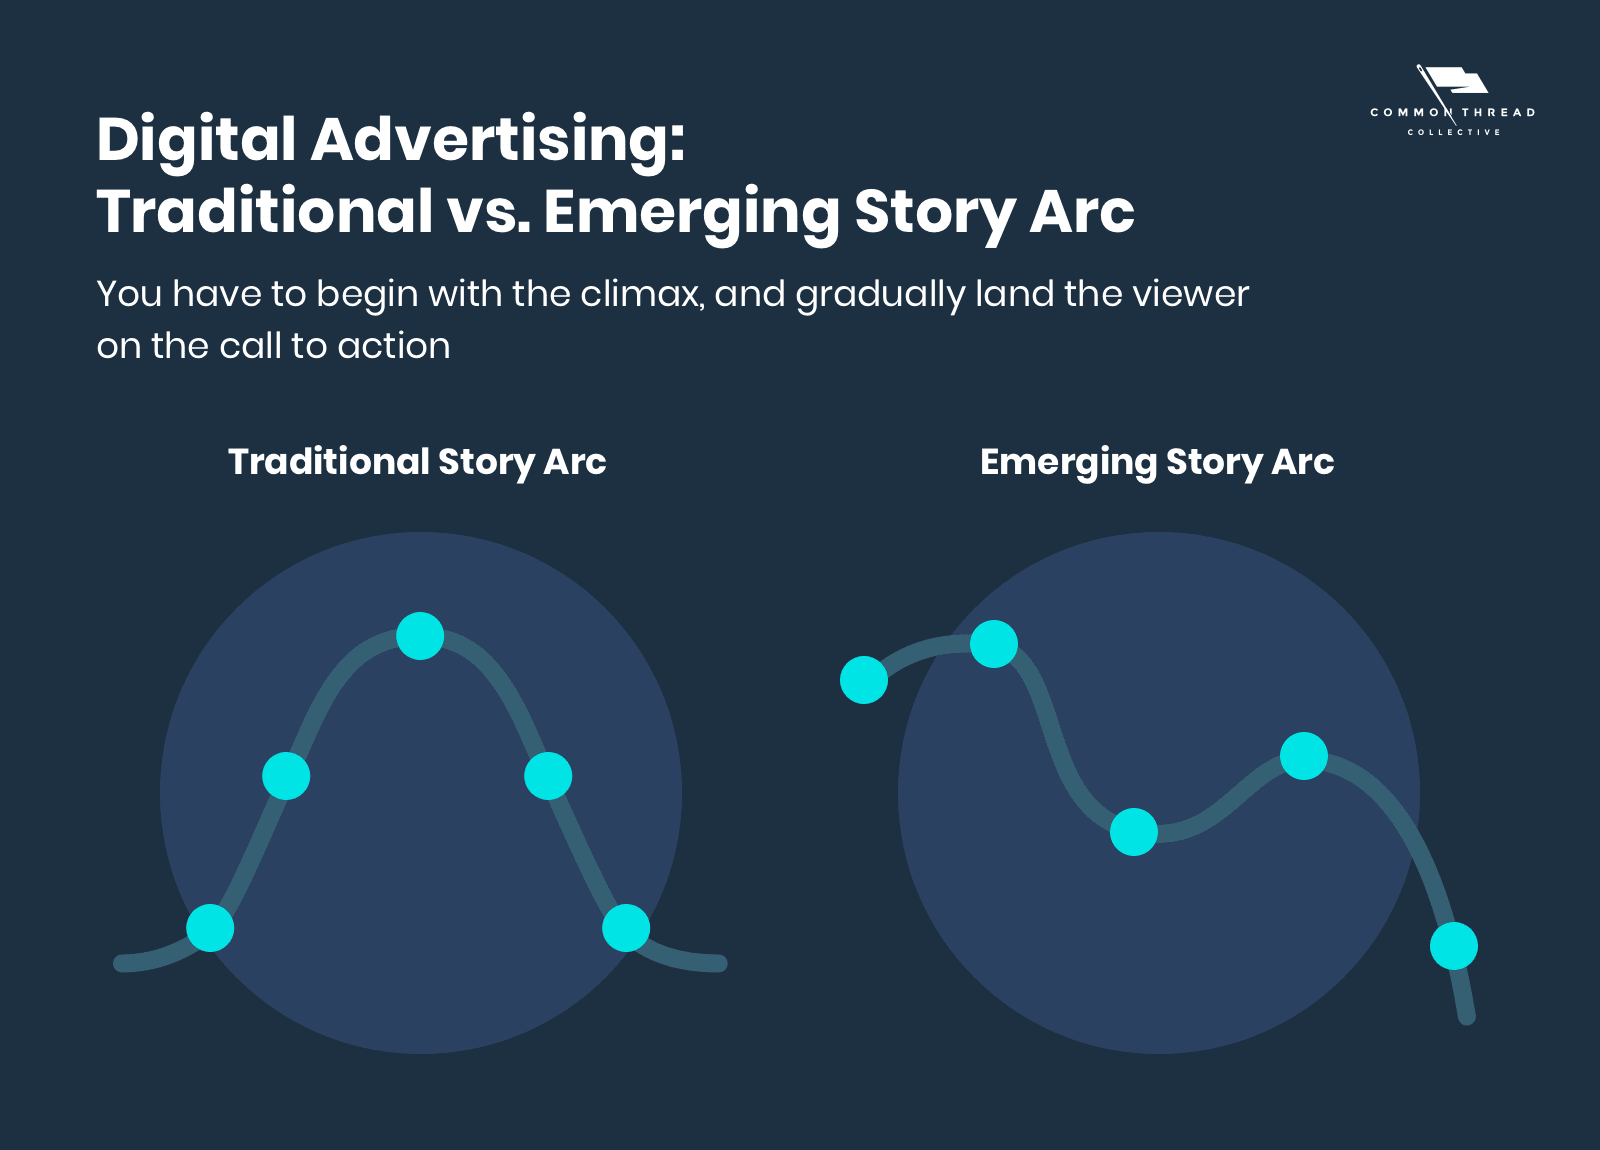 Digital Advertising: Traditional vs. Emerging Story Arc for social media